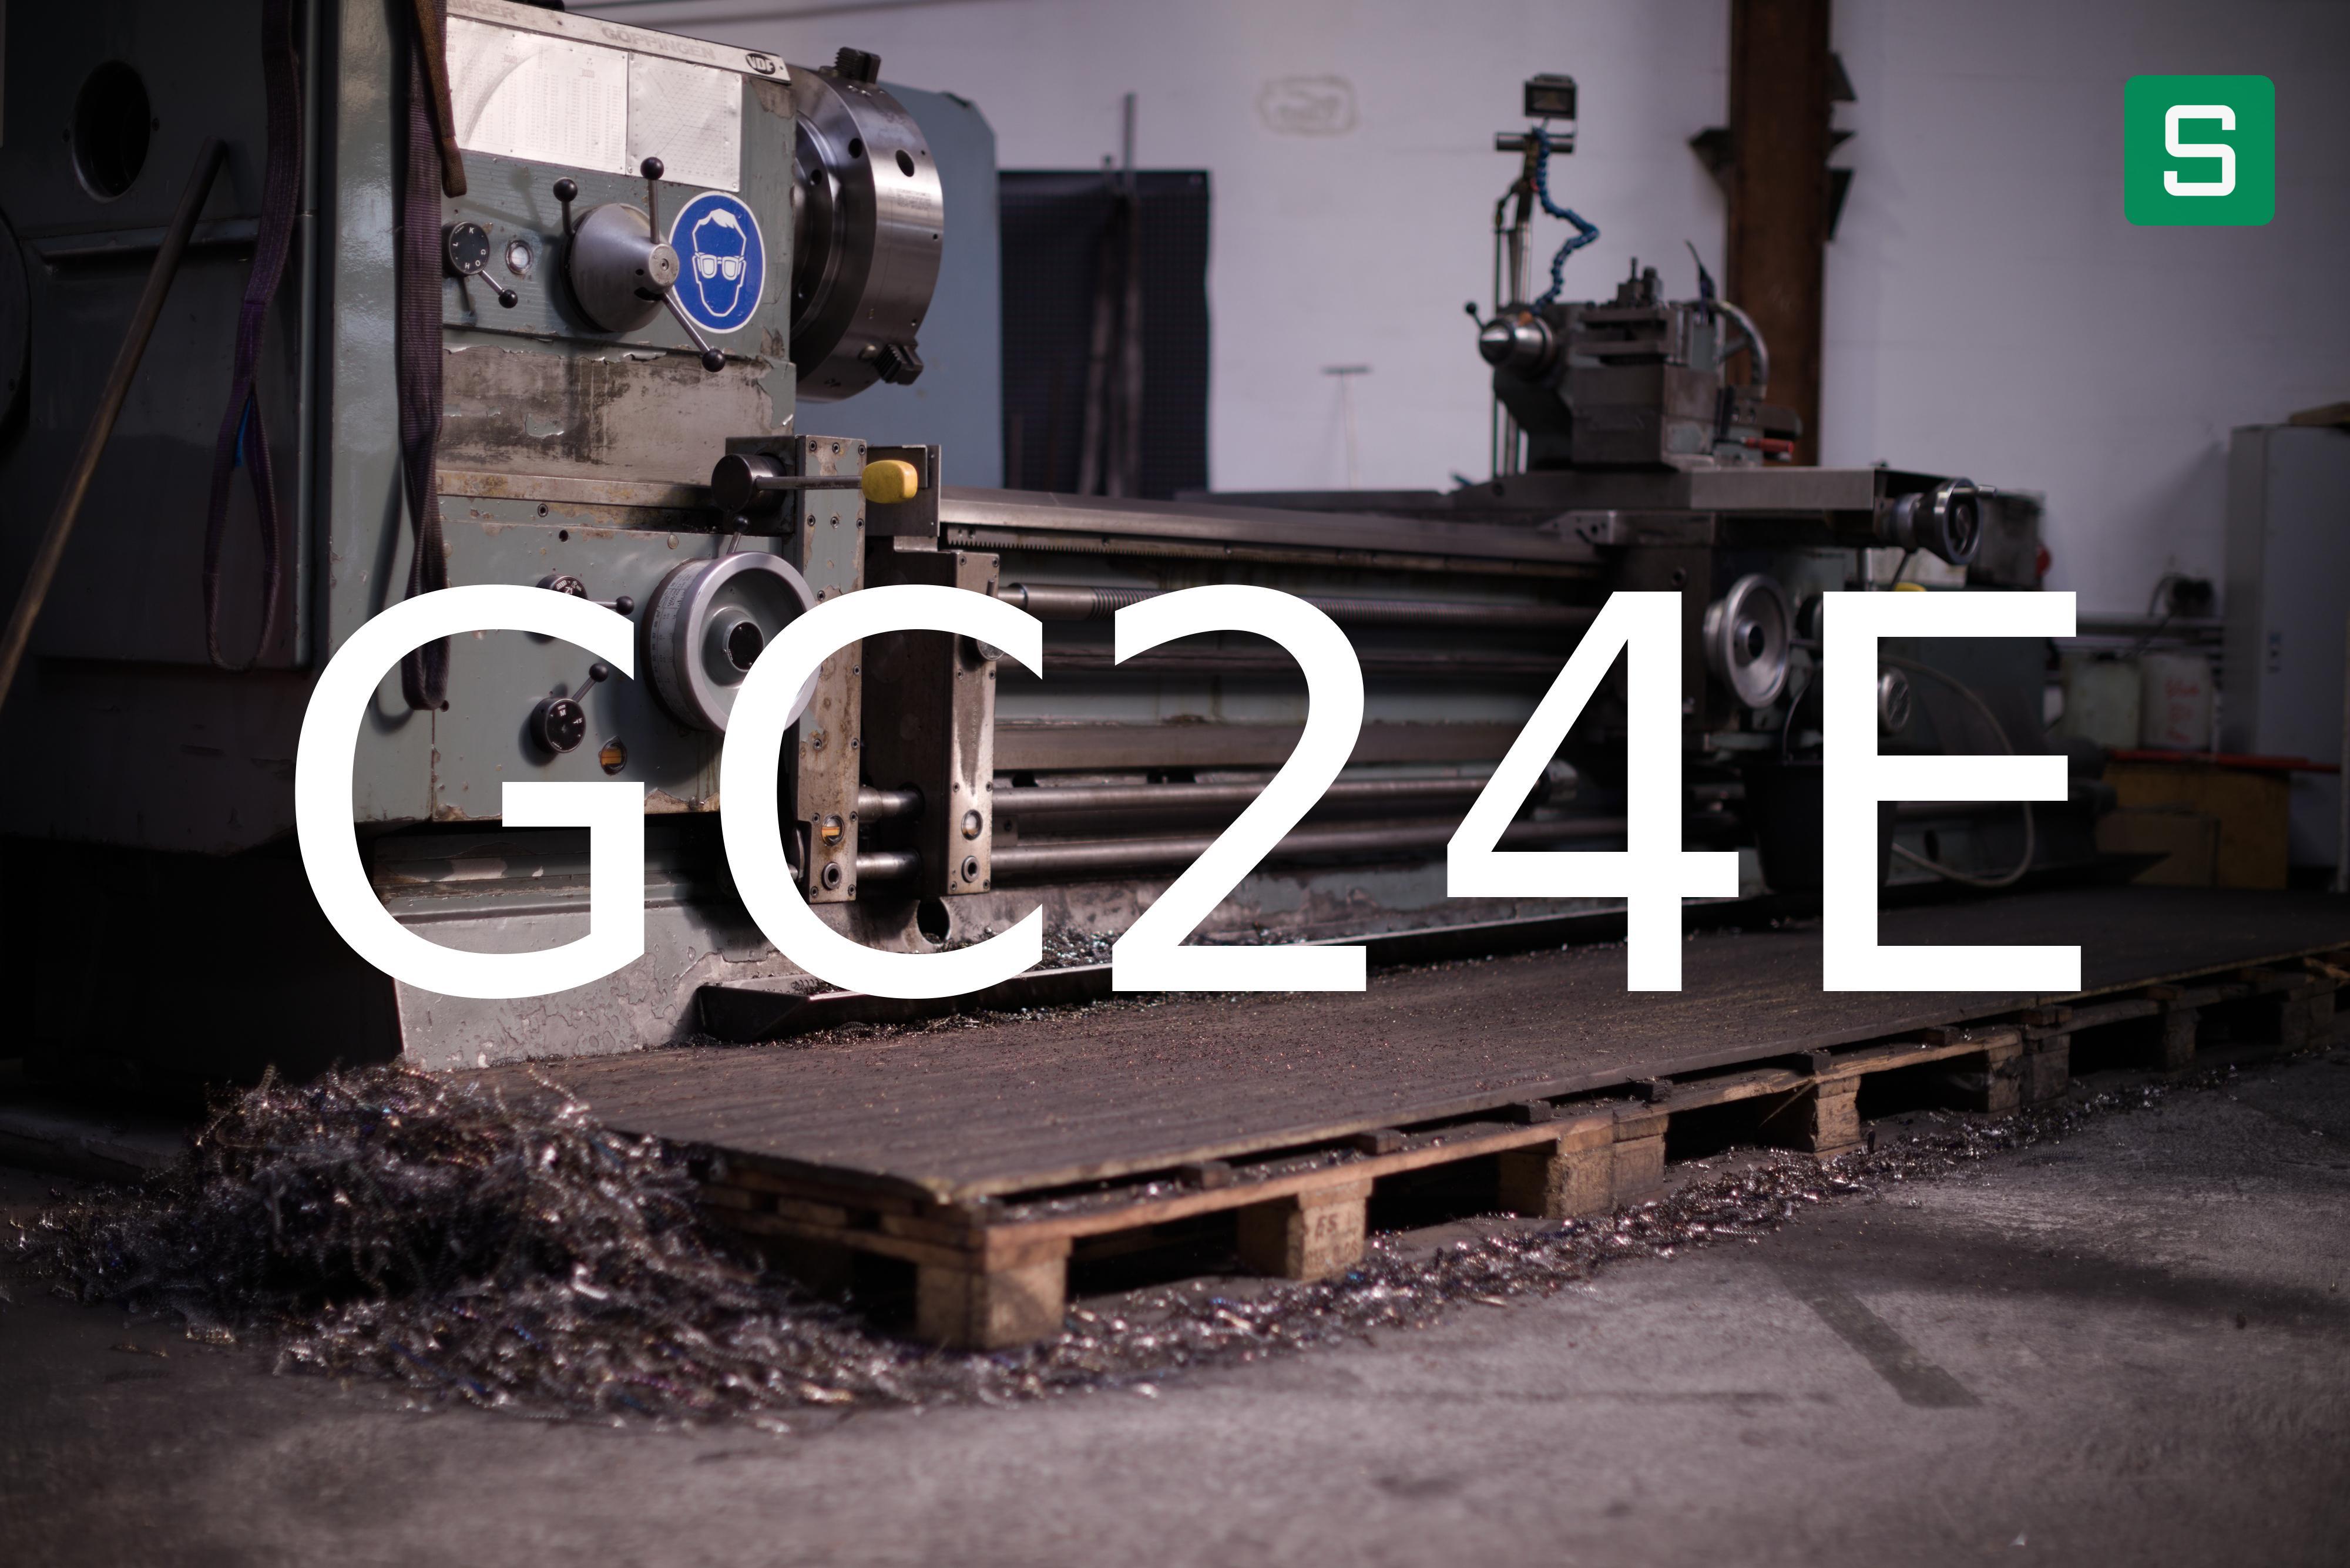 Steel Material: GC24E